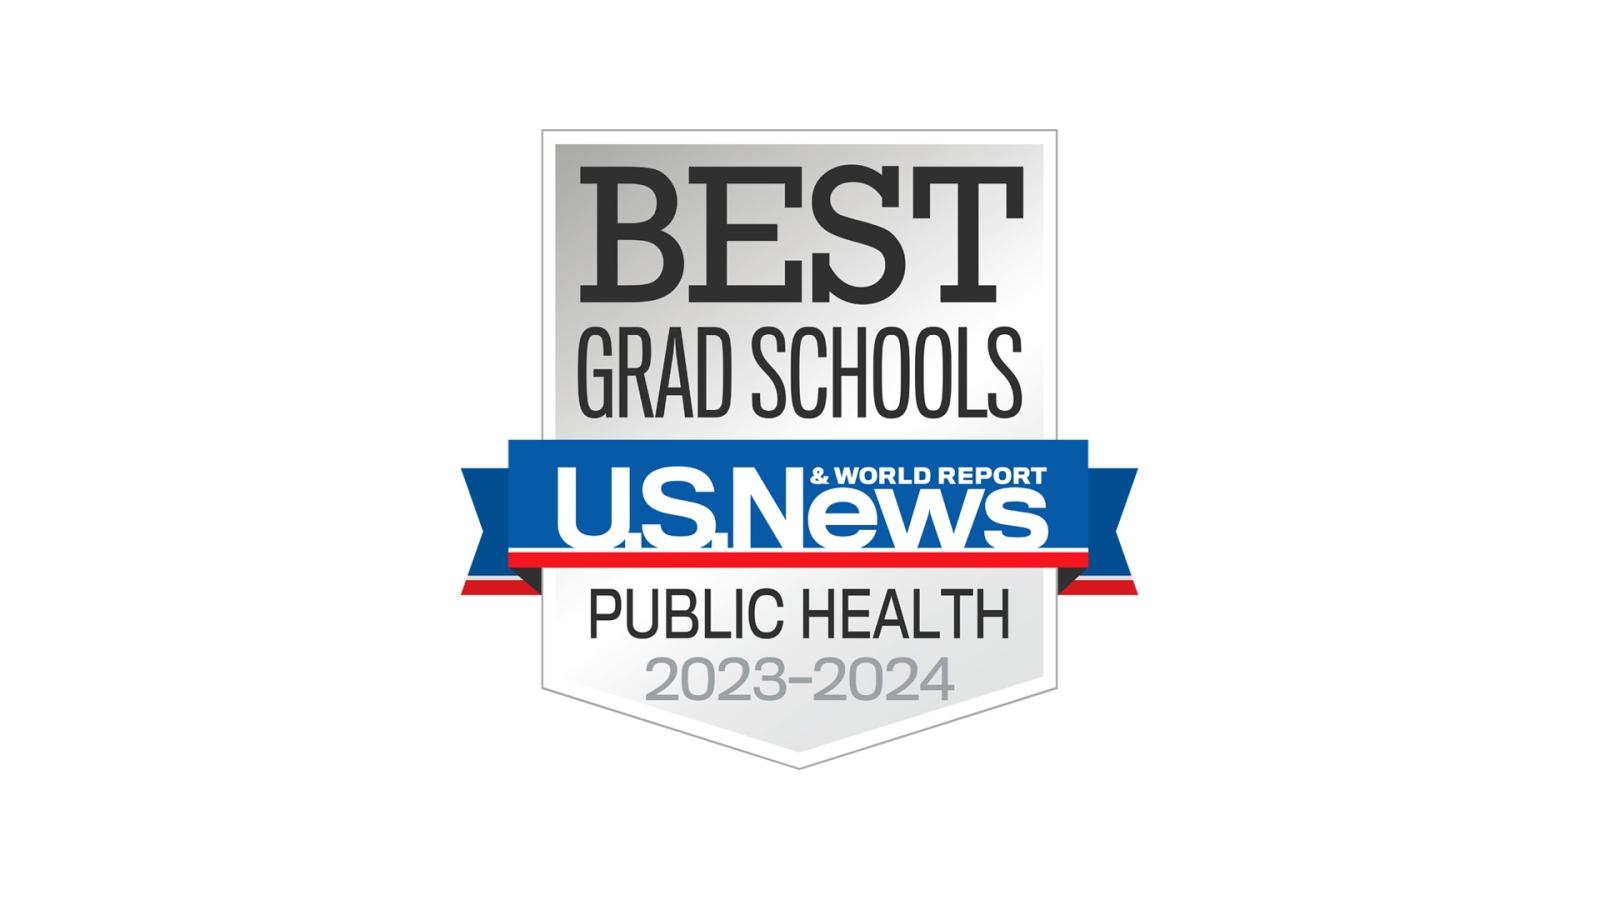 Best Graduate Schools in Public Health by U.S. News & World Report